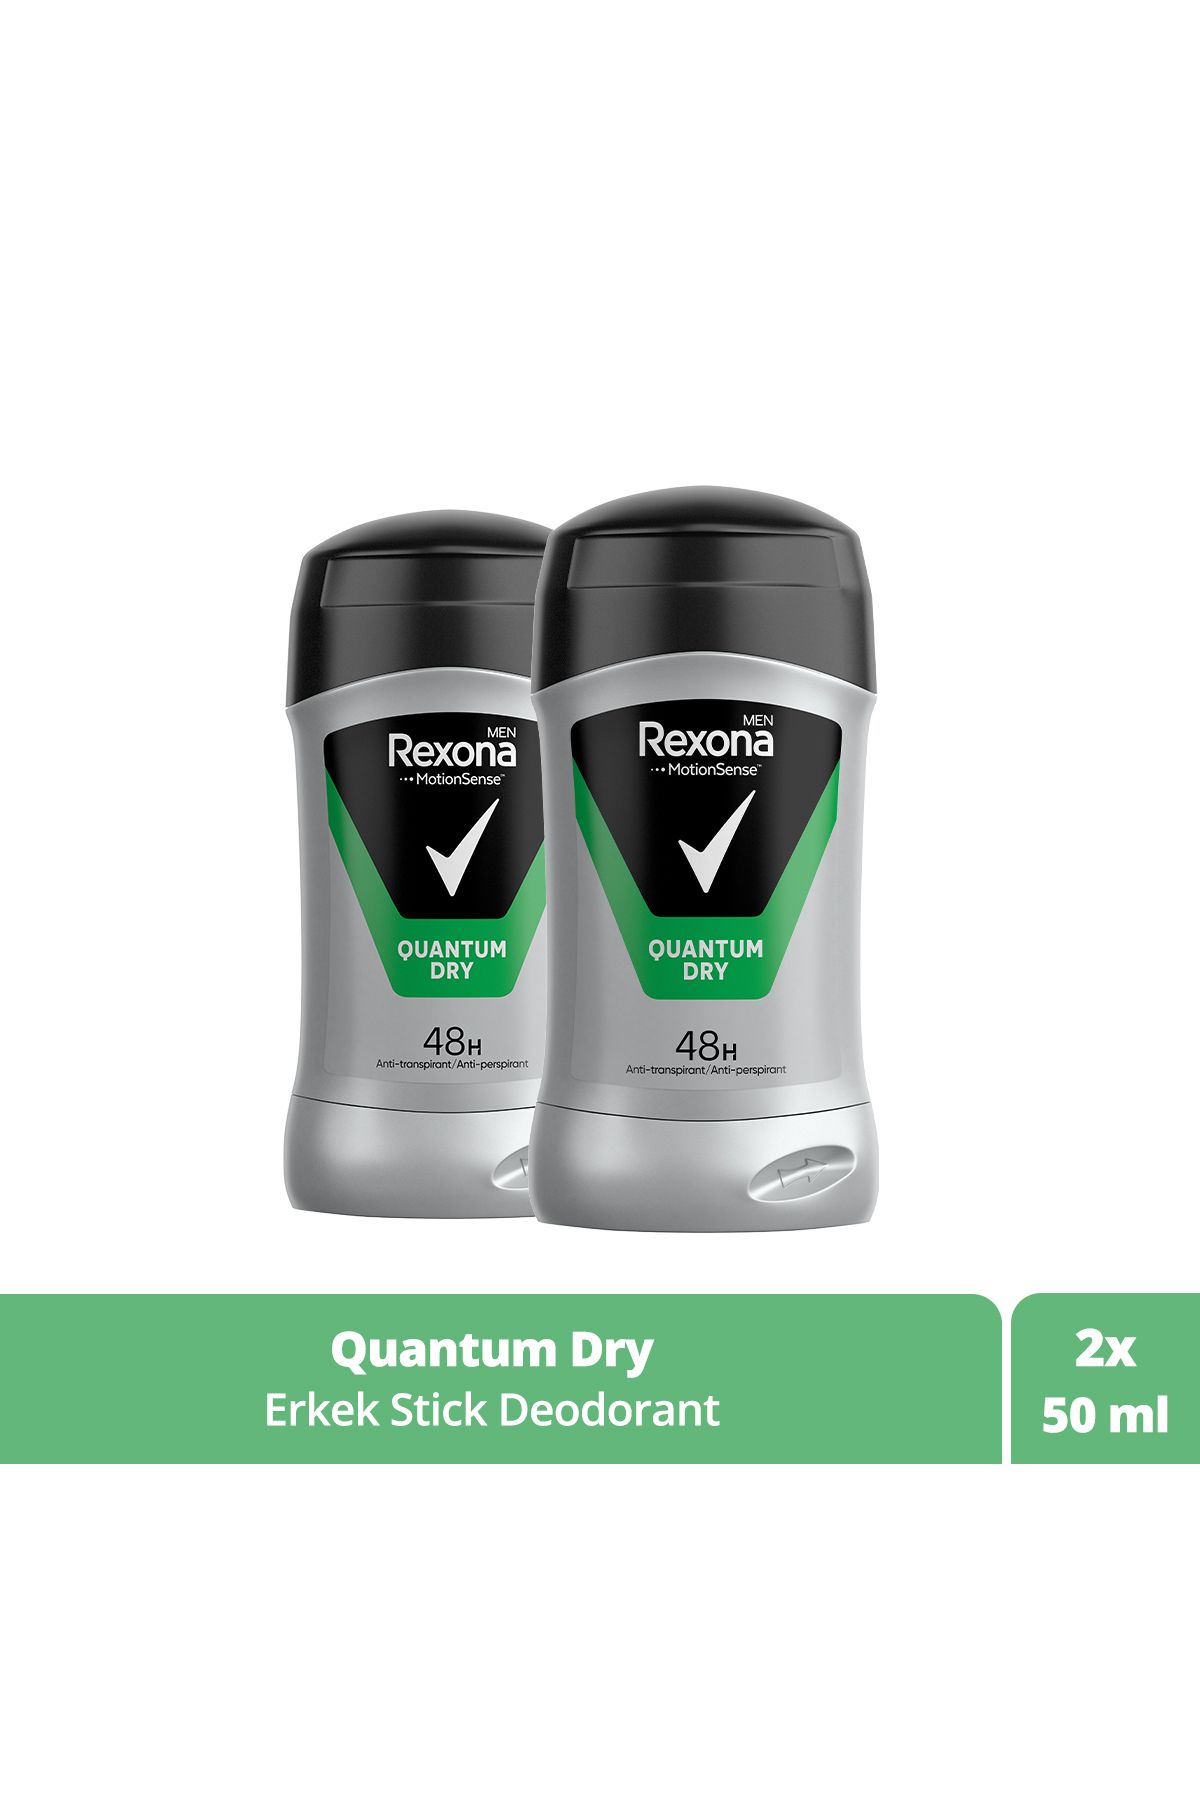 Rexona Men Motionsense Erkek Stick Deodorant Quantum Dry 50 ml X2